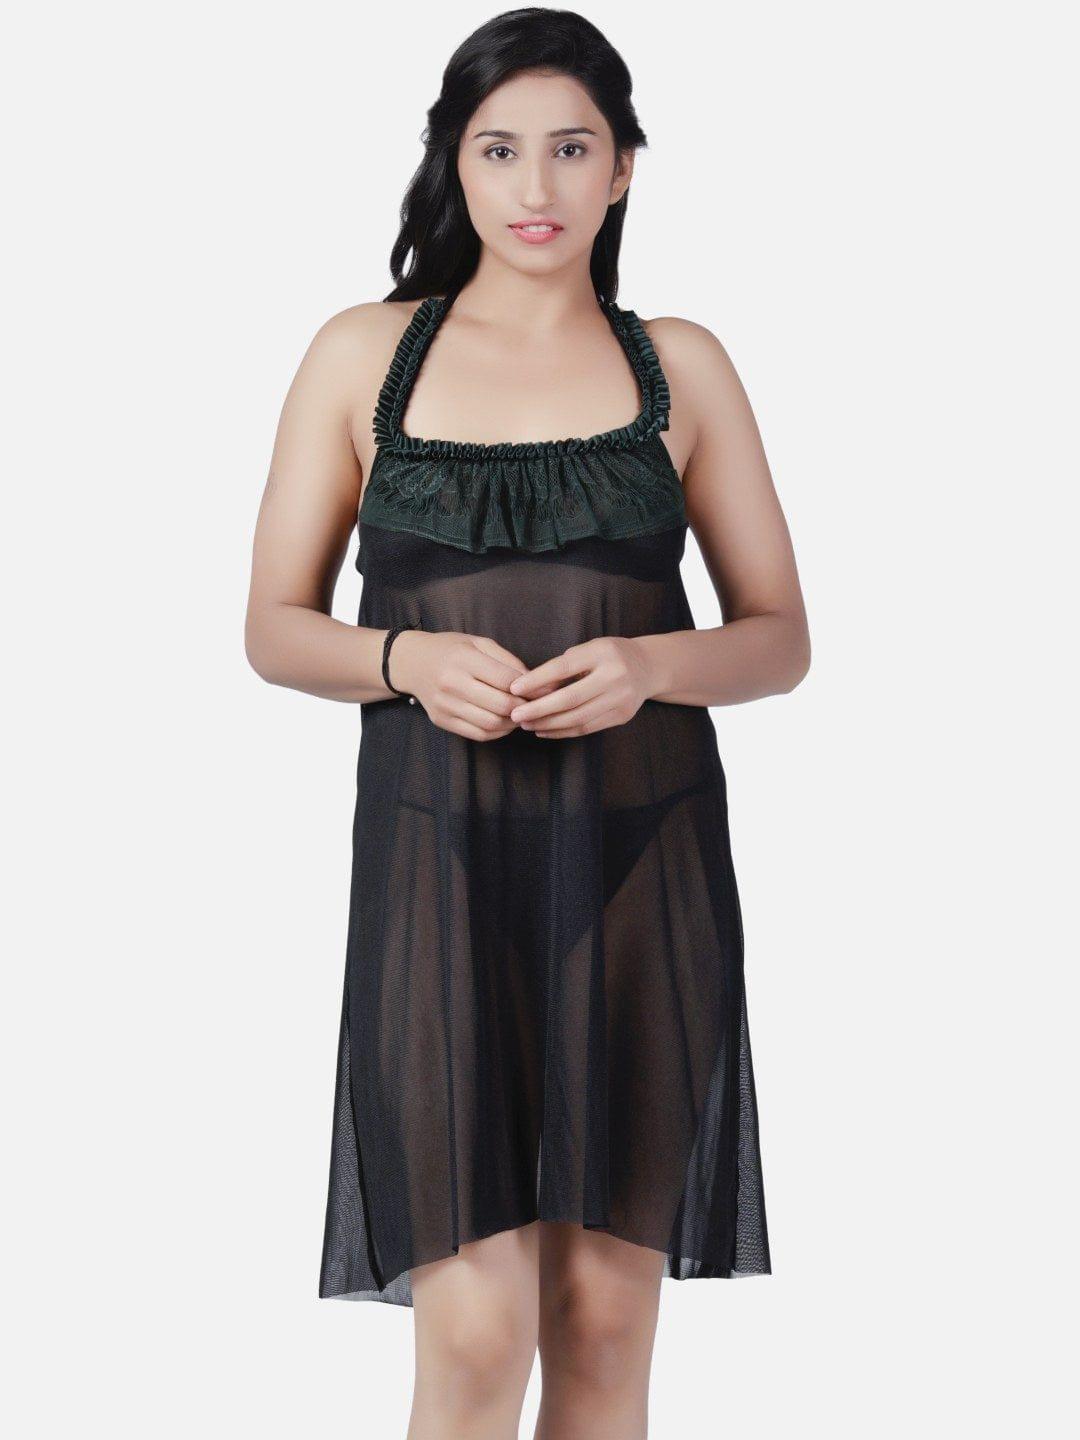 TRIXIBELLE Nightwear for Girls - Babydoll Lingerie for Women - Honeymoon  Babydoll Dress - Babydoll Sleepwear (Green, X-Large) at Amazon Women's  Clothing store